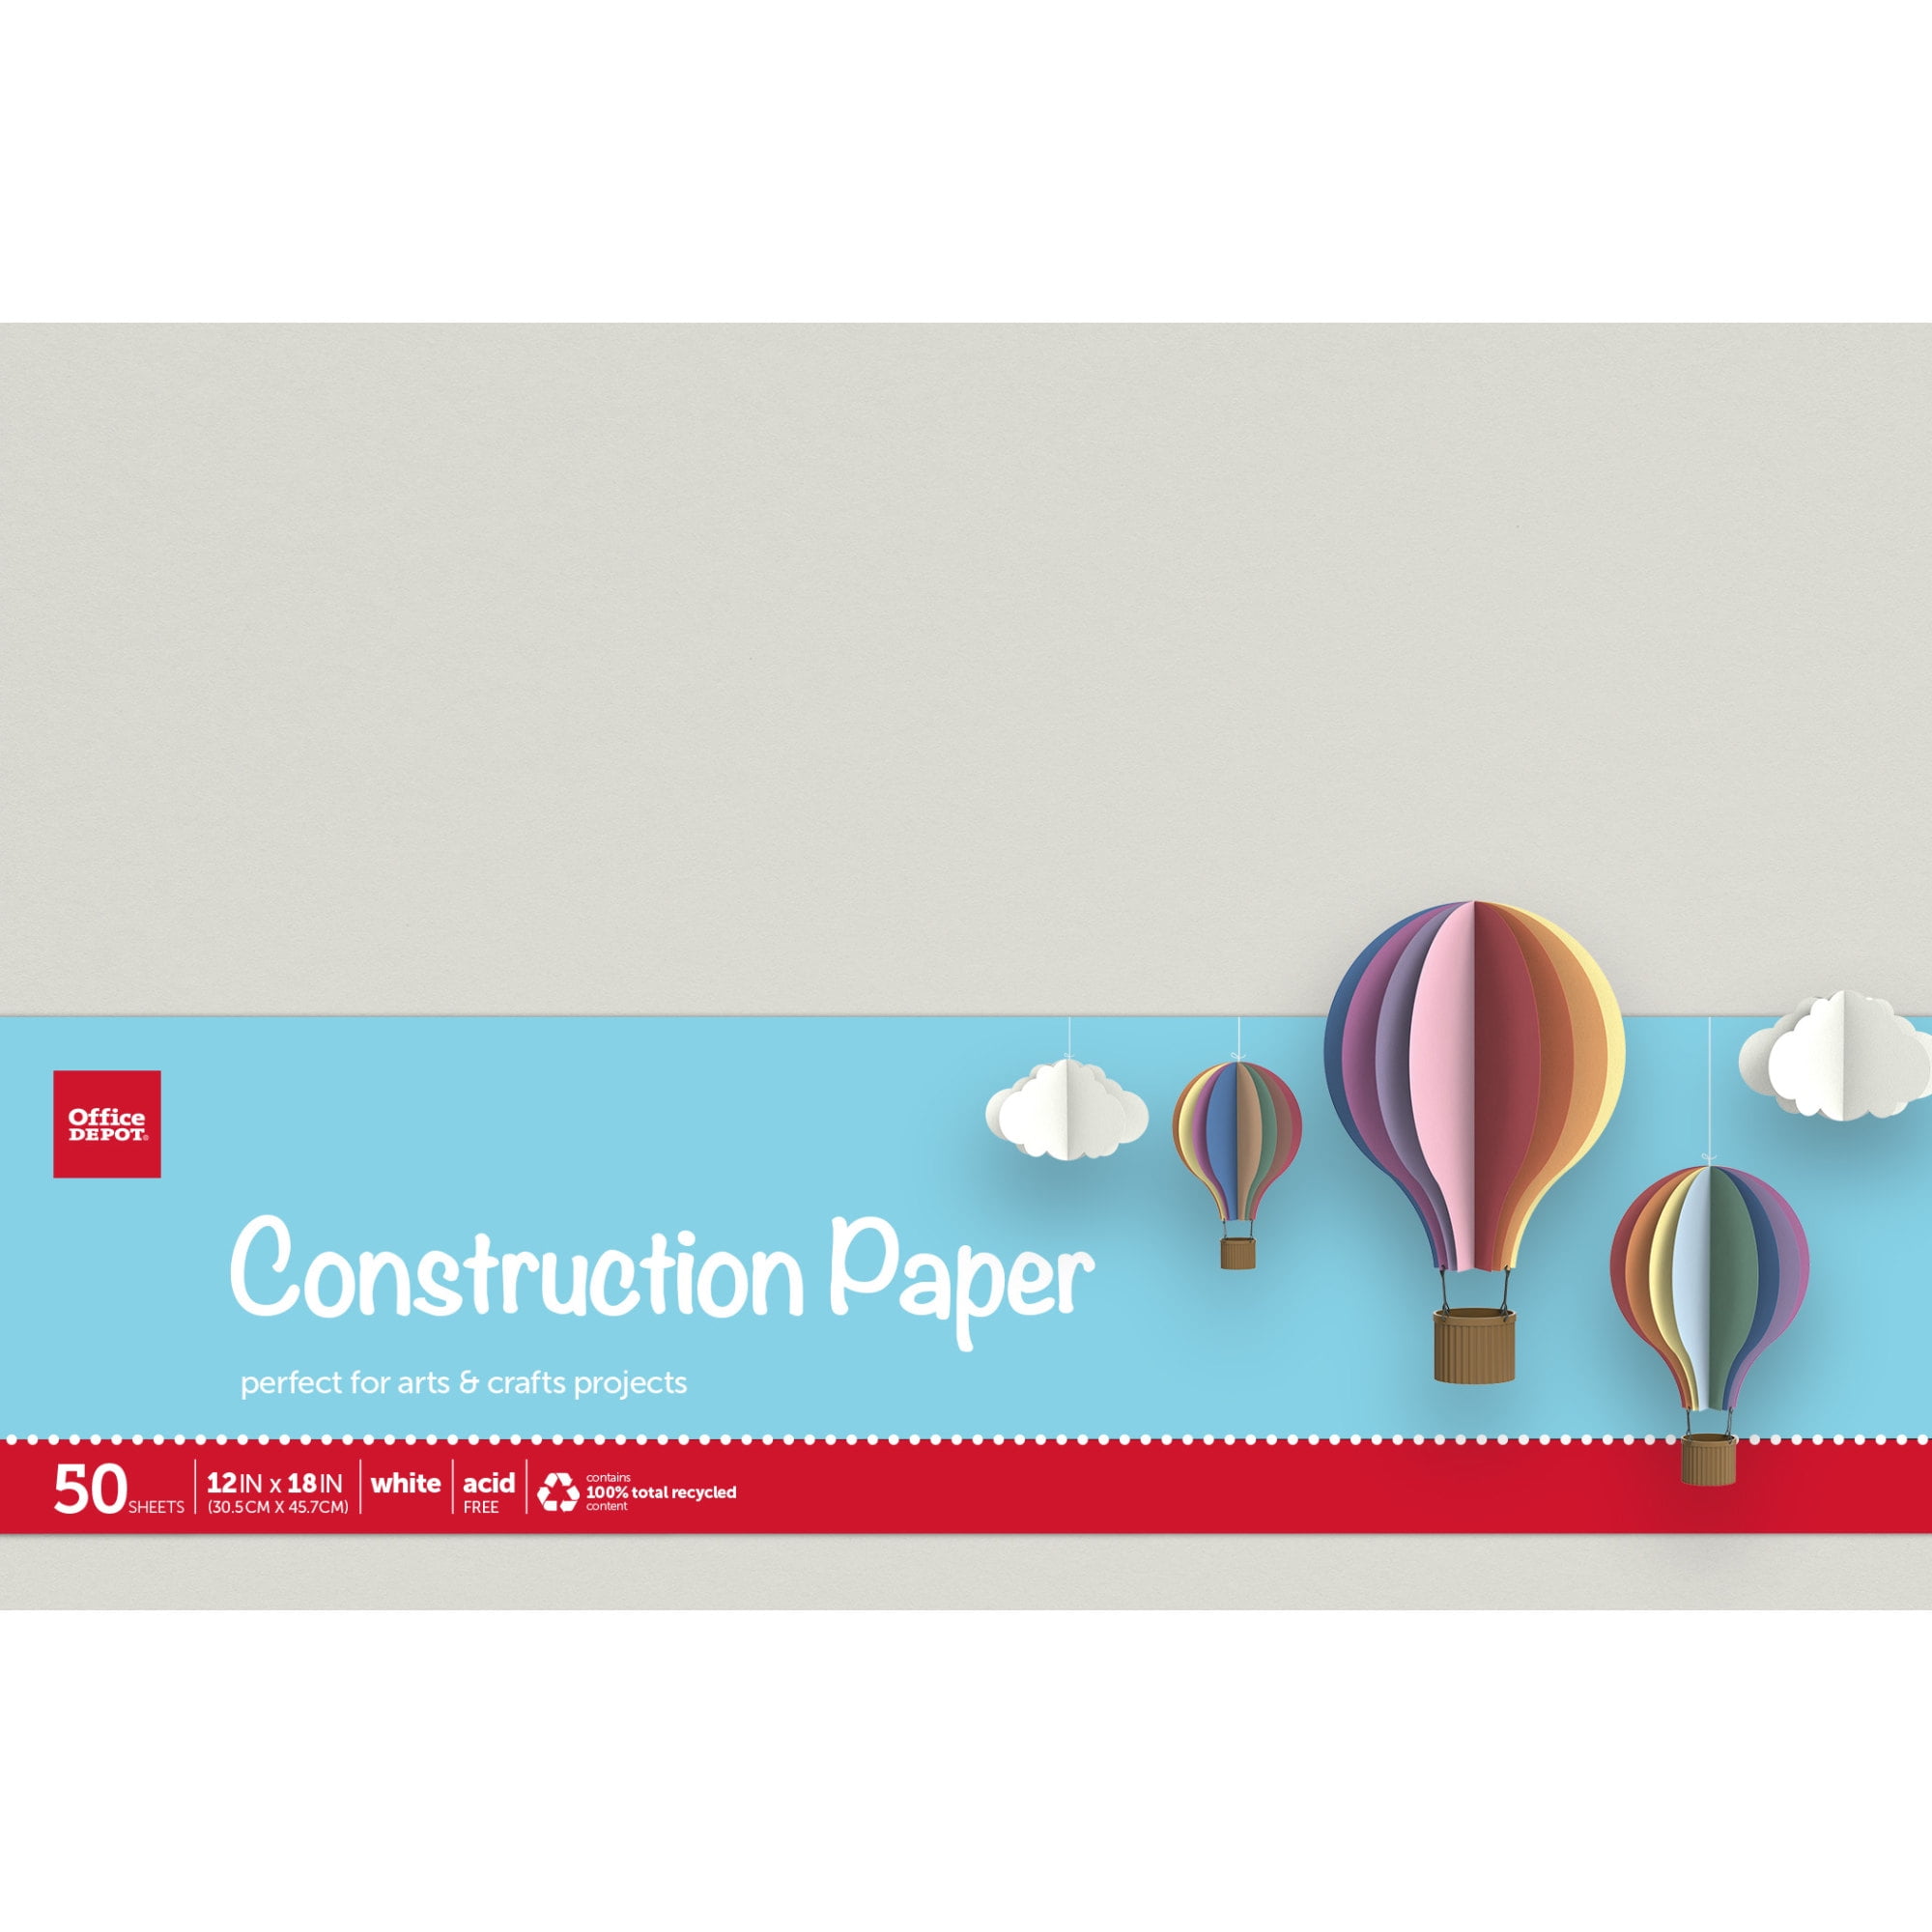 Construction Paper Bestsource Officesupplies Craft